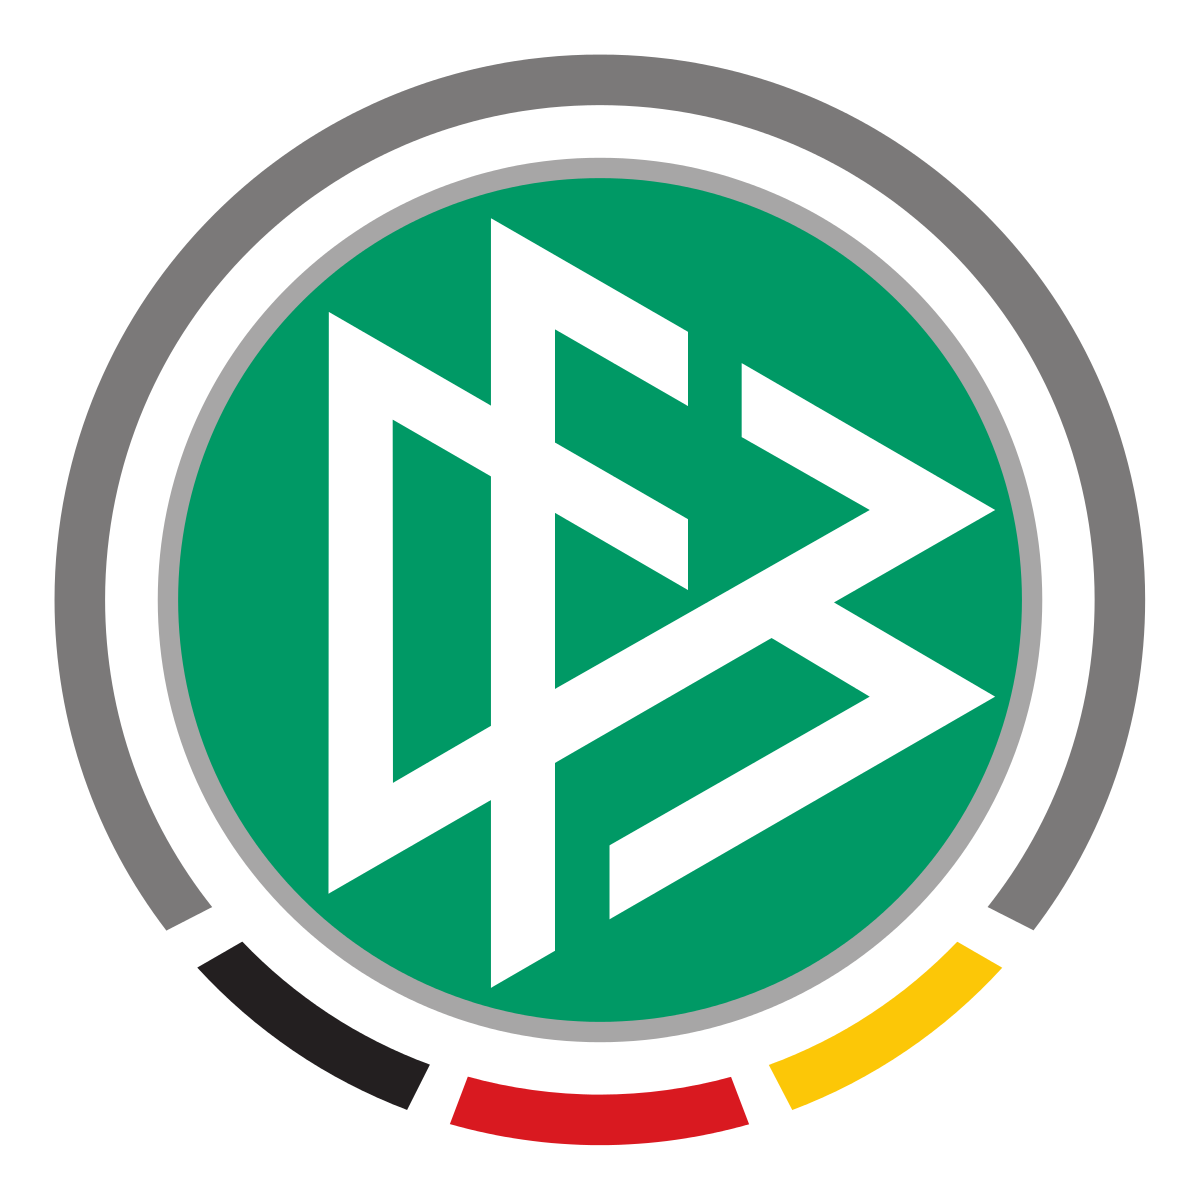 League логотип